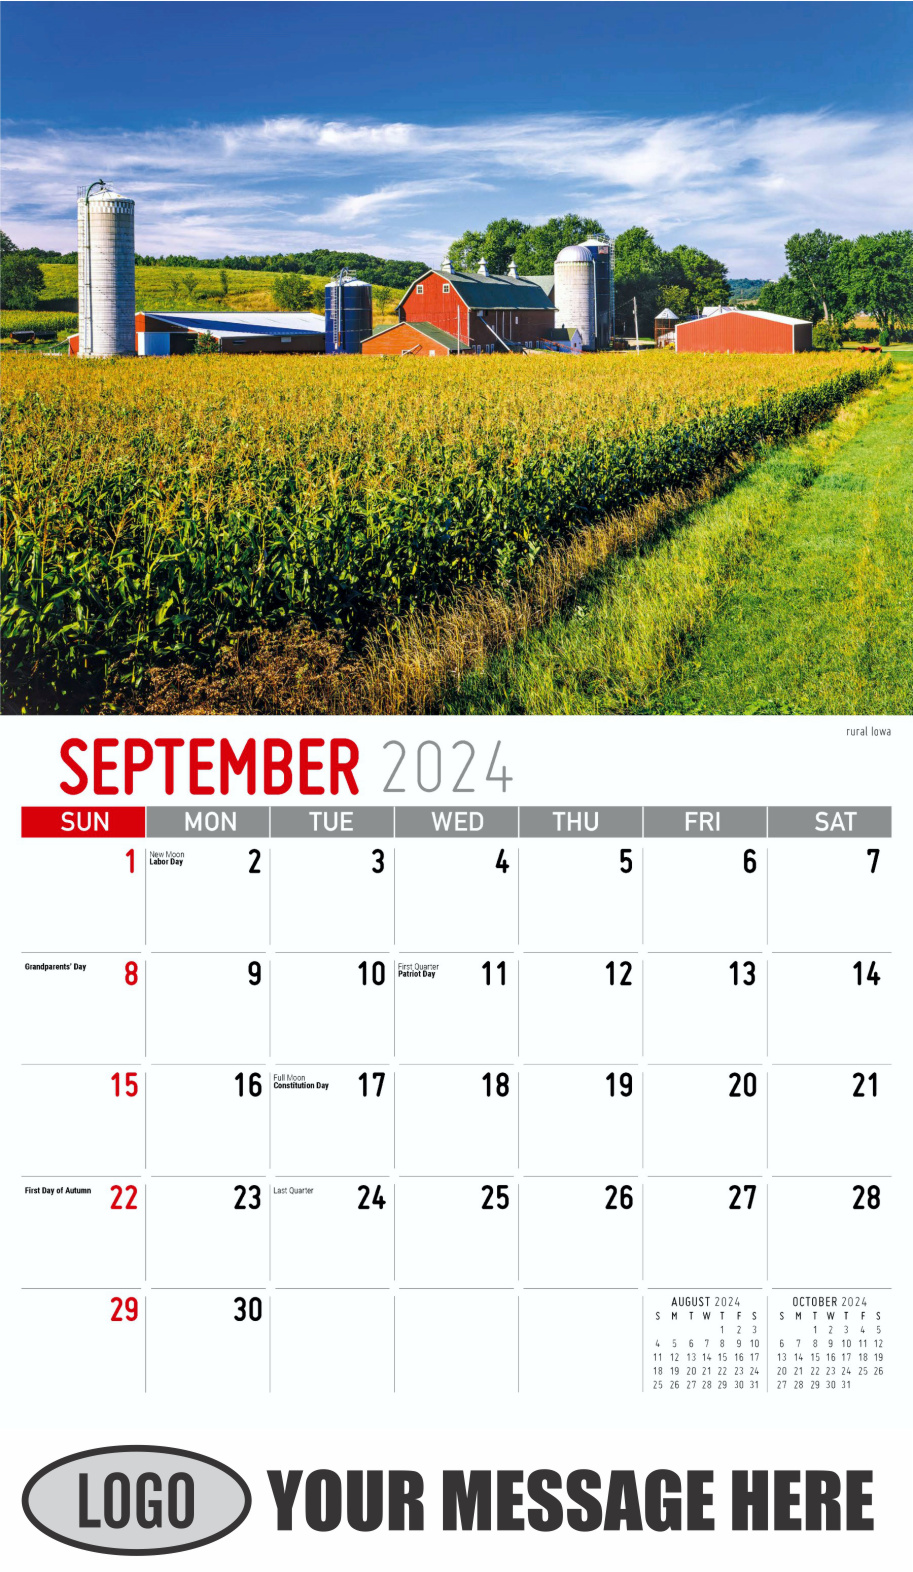 Scenes of America 2024 Business Advertising Wall Calendar - September